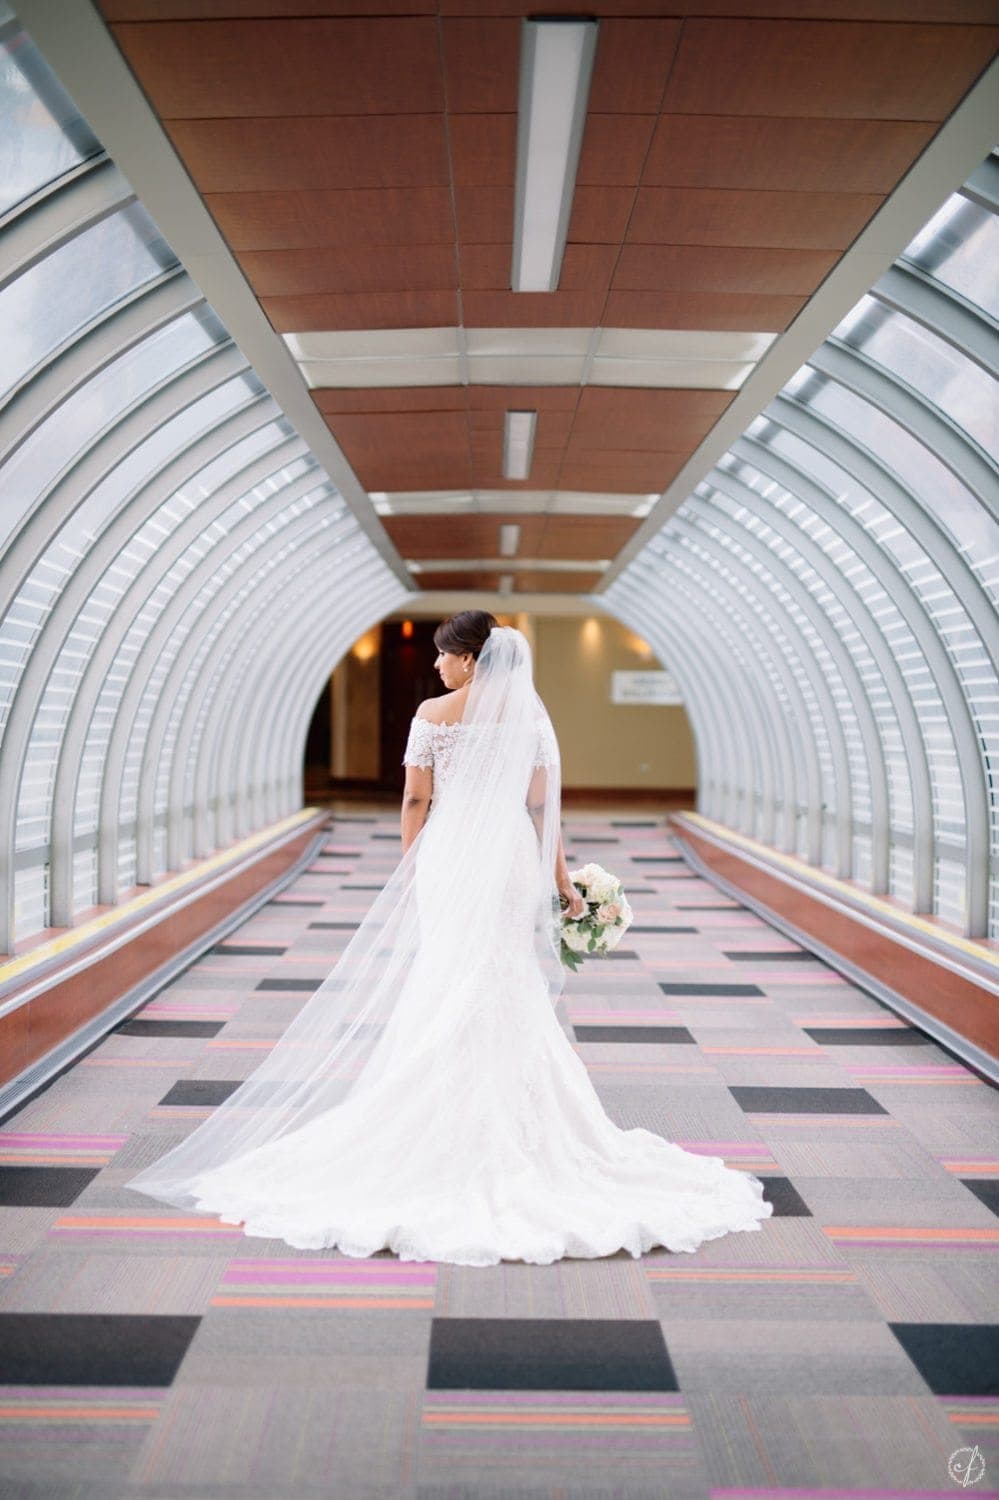 Bridal photography at Condado Plaza Hilton by Camille Fontz, Puerto Rico wedding photographer.